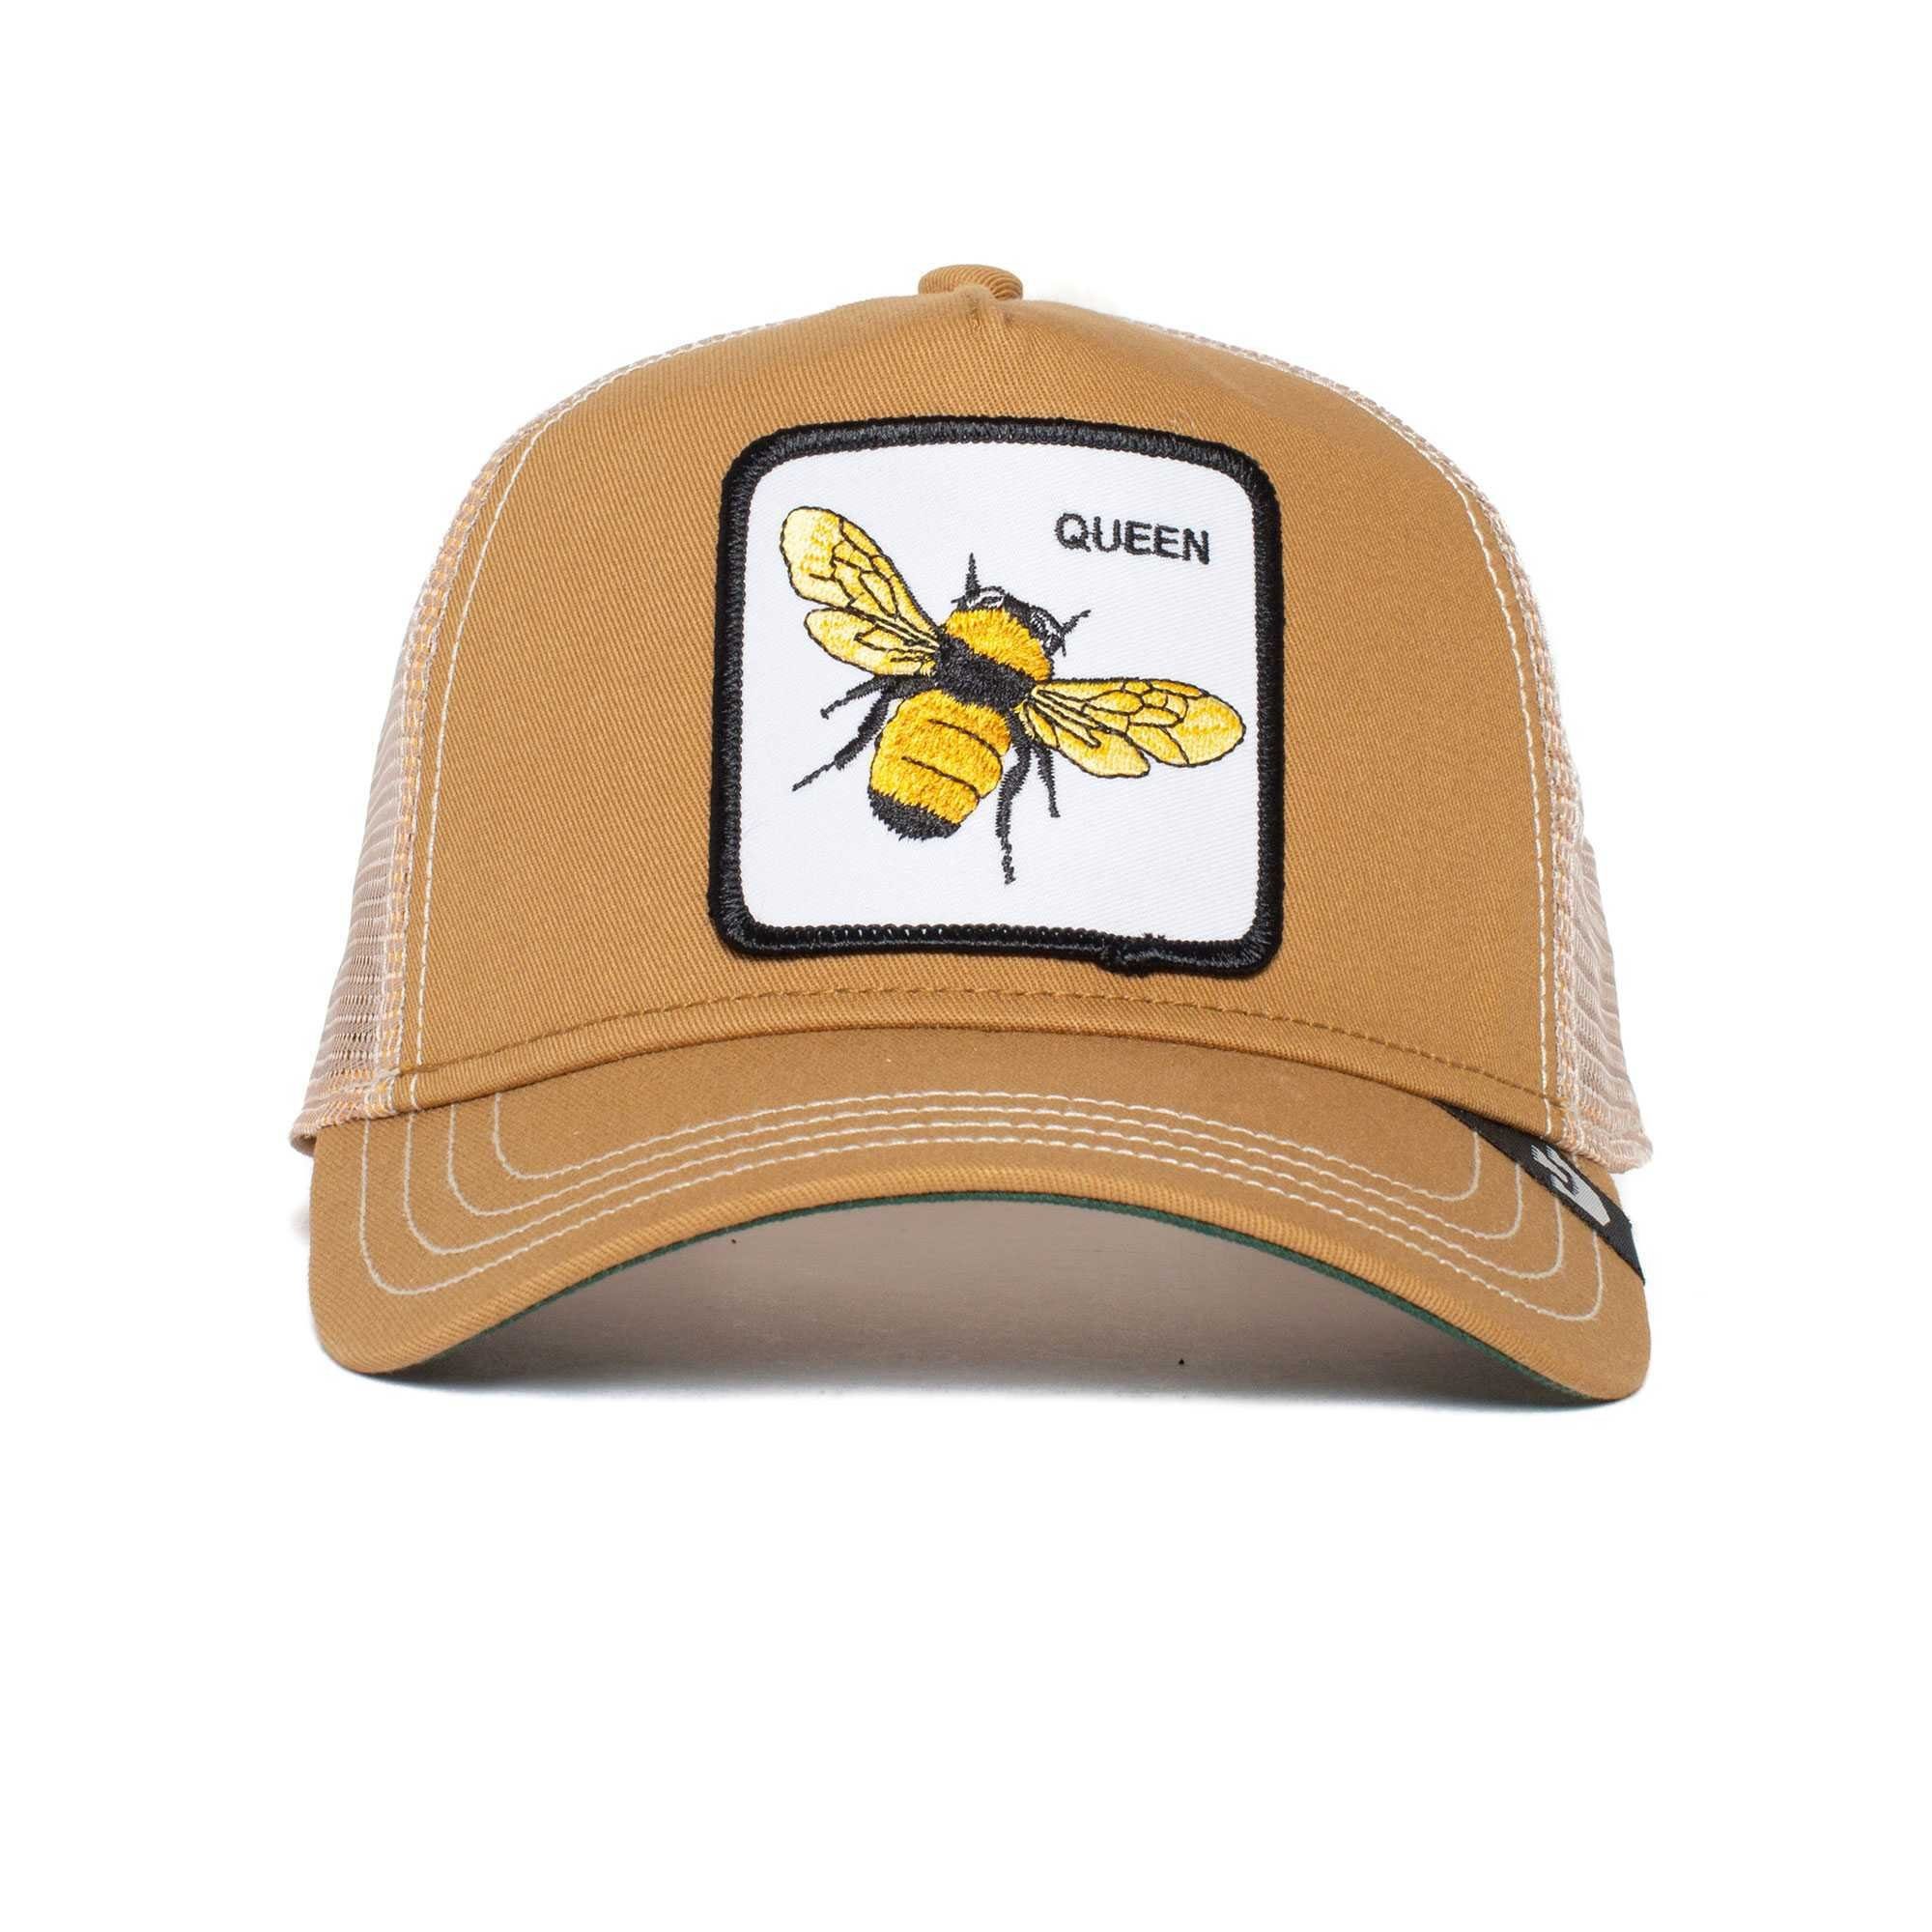 Bee Unisex The GOORIN Cap Cap Bros. Size Kappe, Queen One camel Trucker Baseball - Frontpatch,